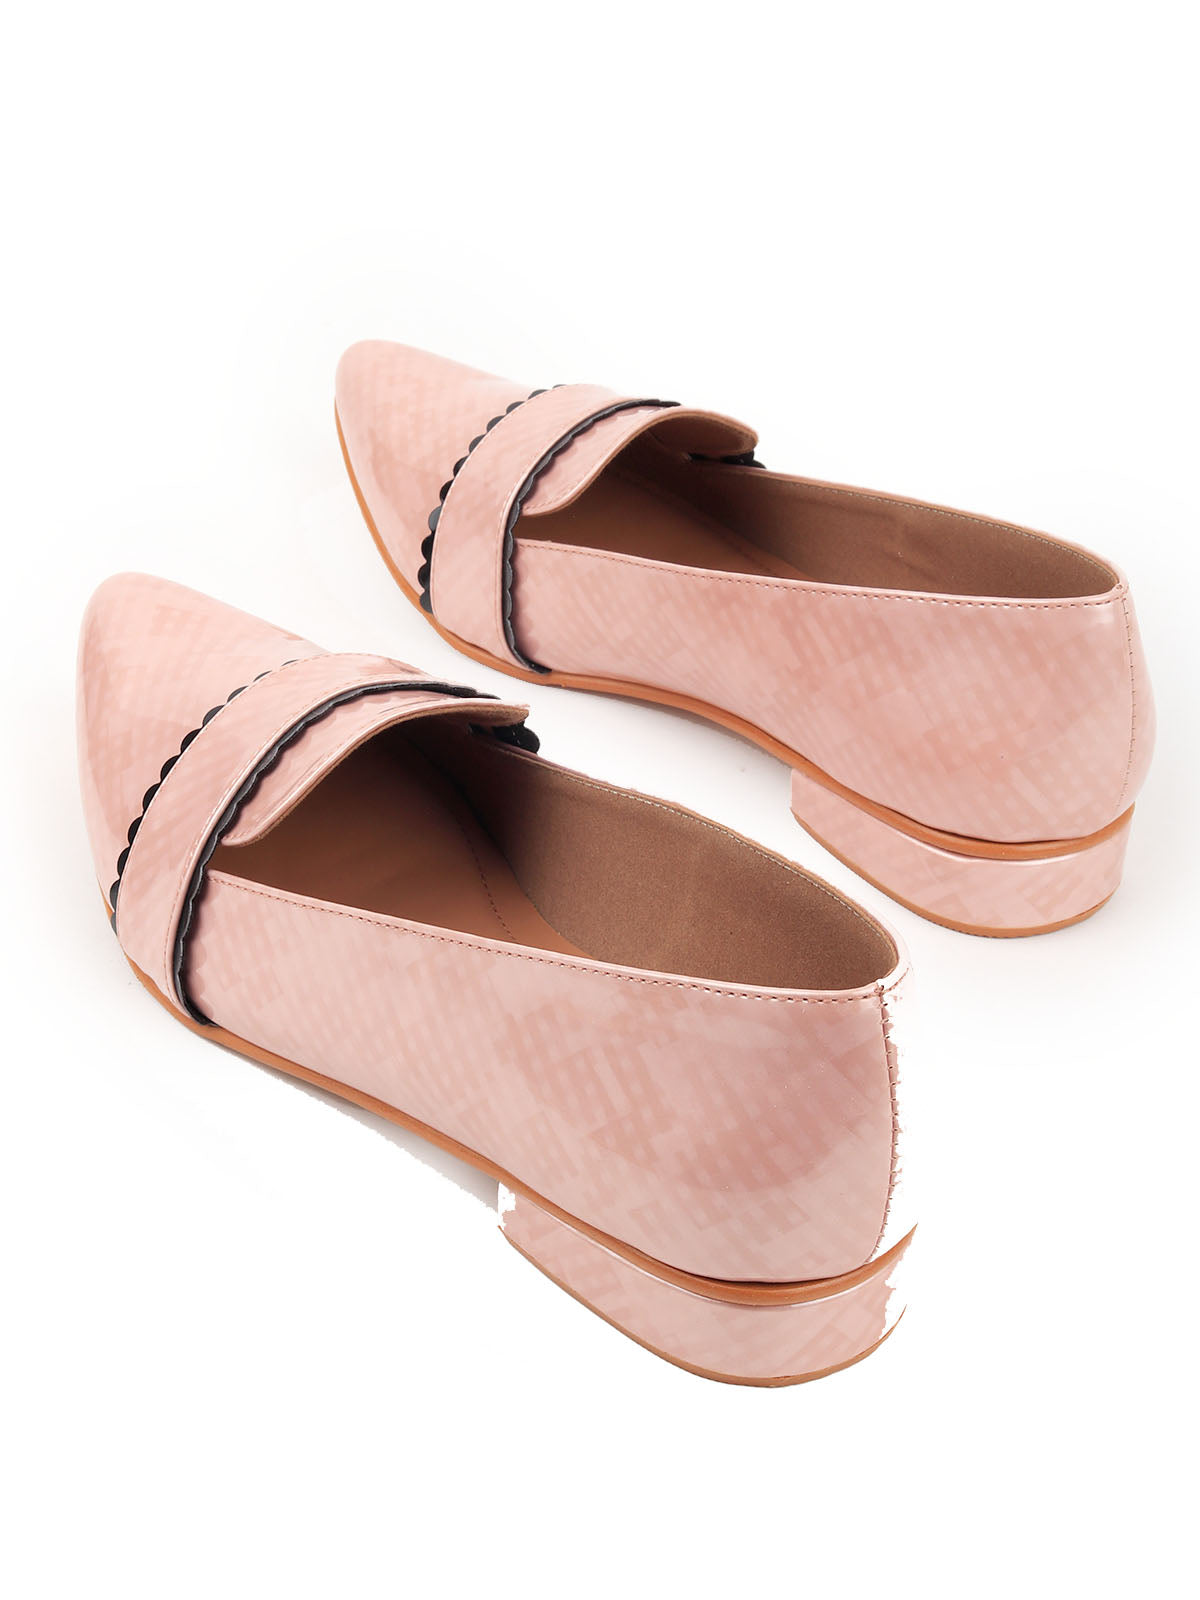 Odette Women Blush Pink Patterned Flat Loafers